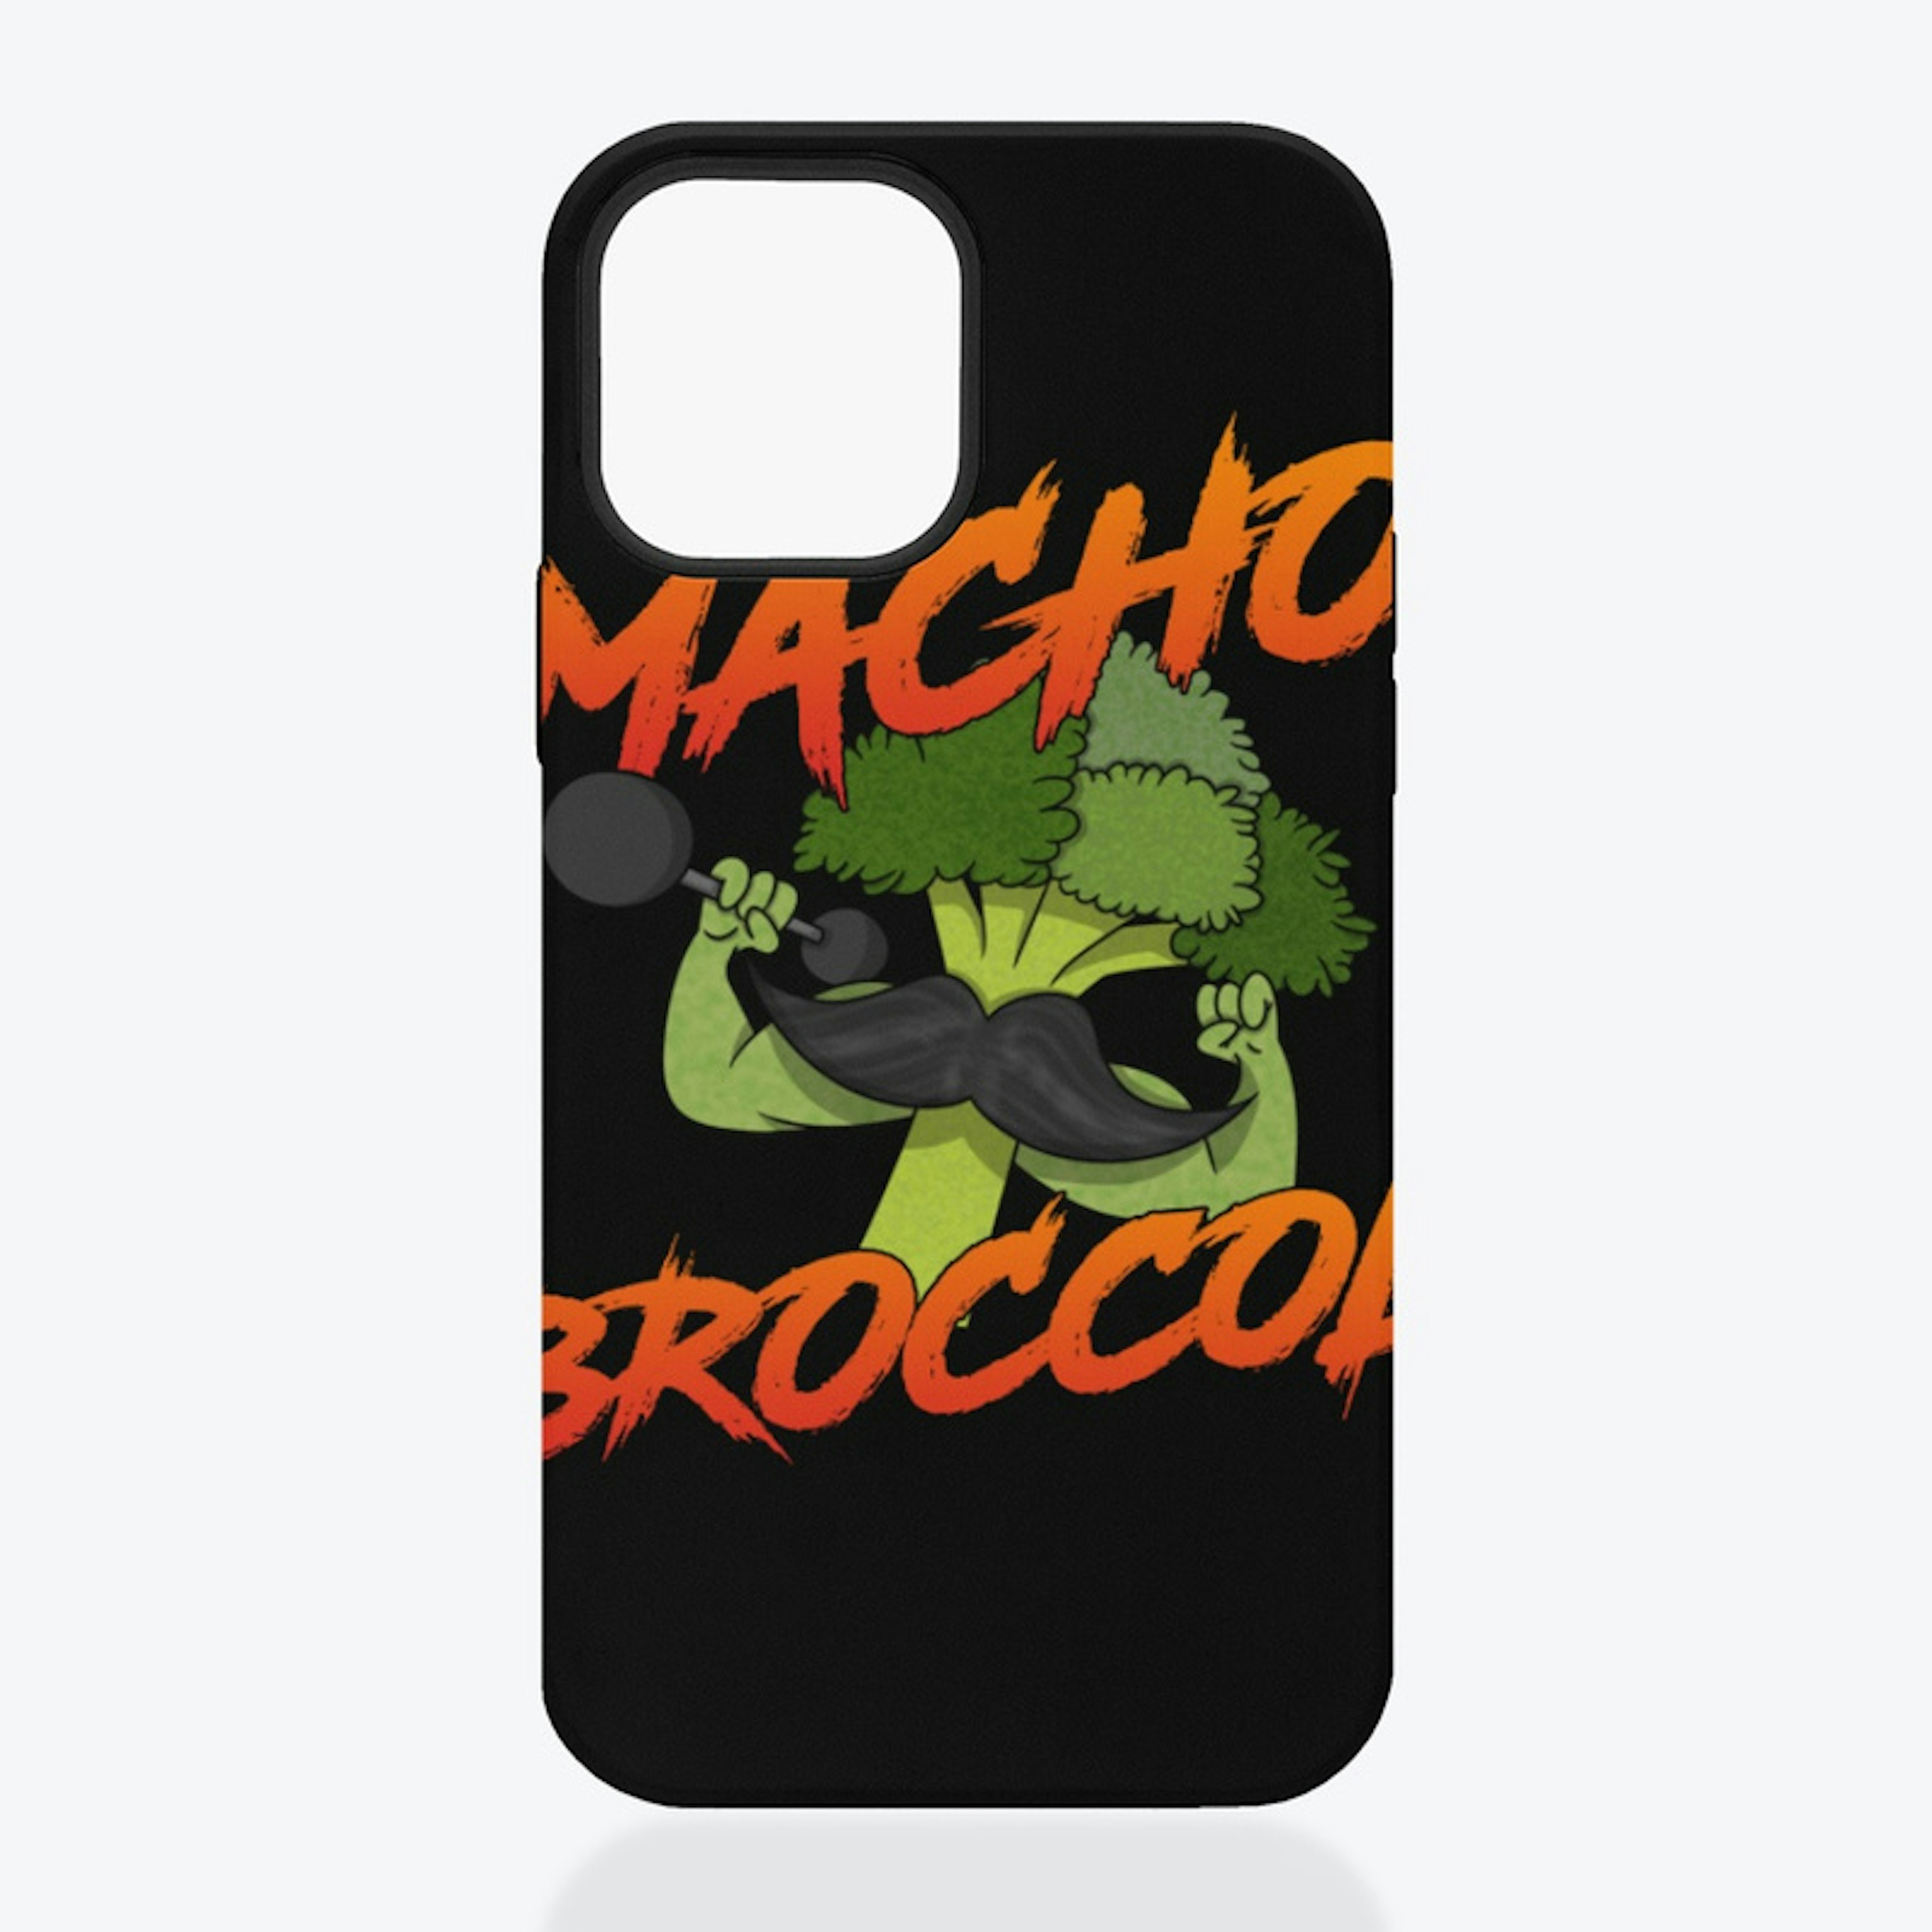 Macho Broccoli